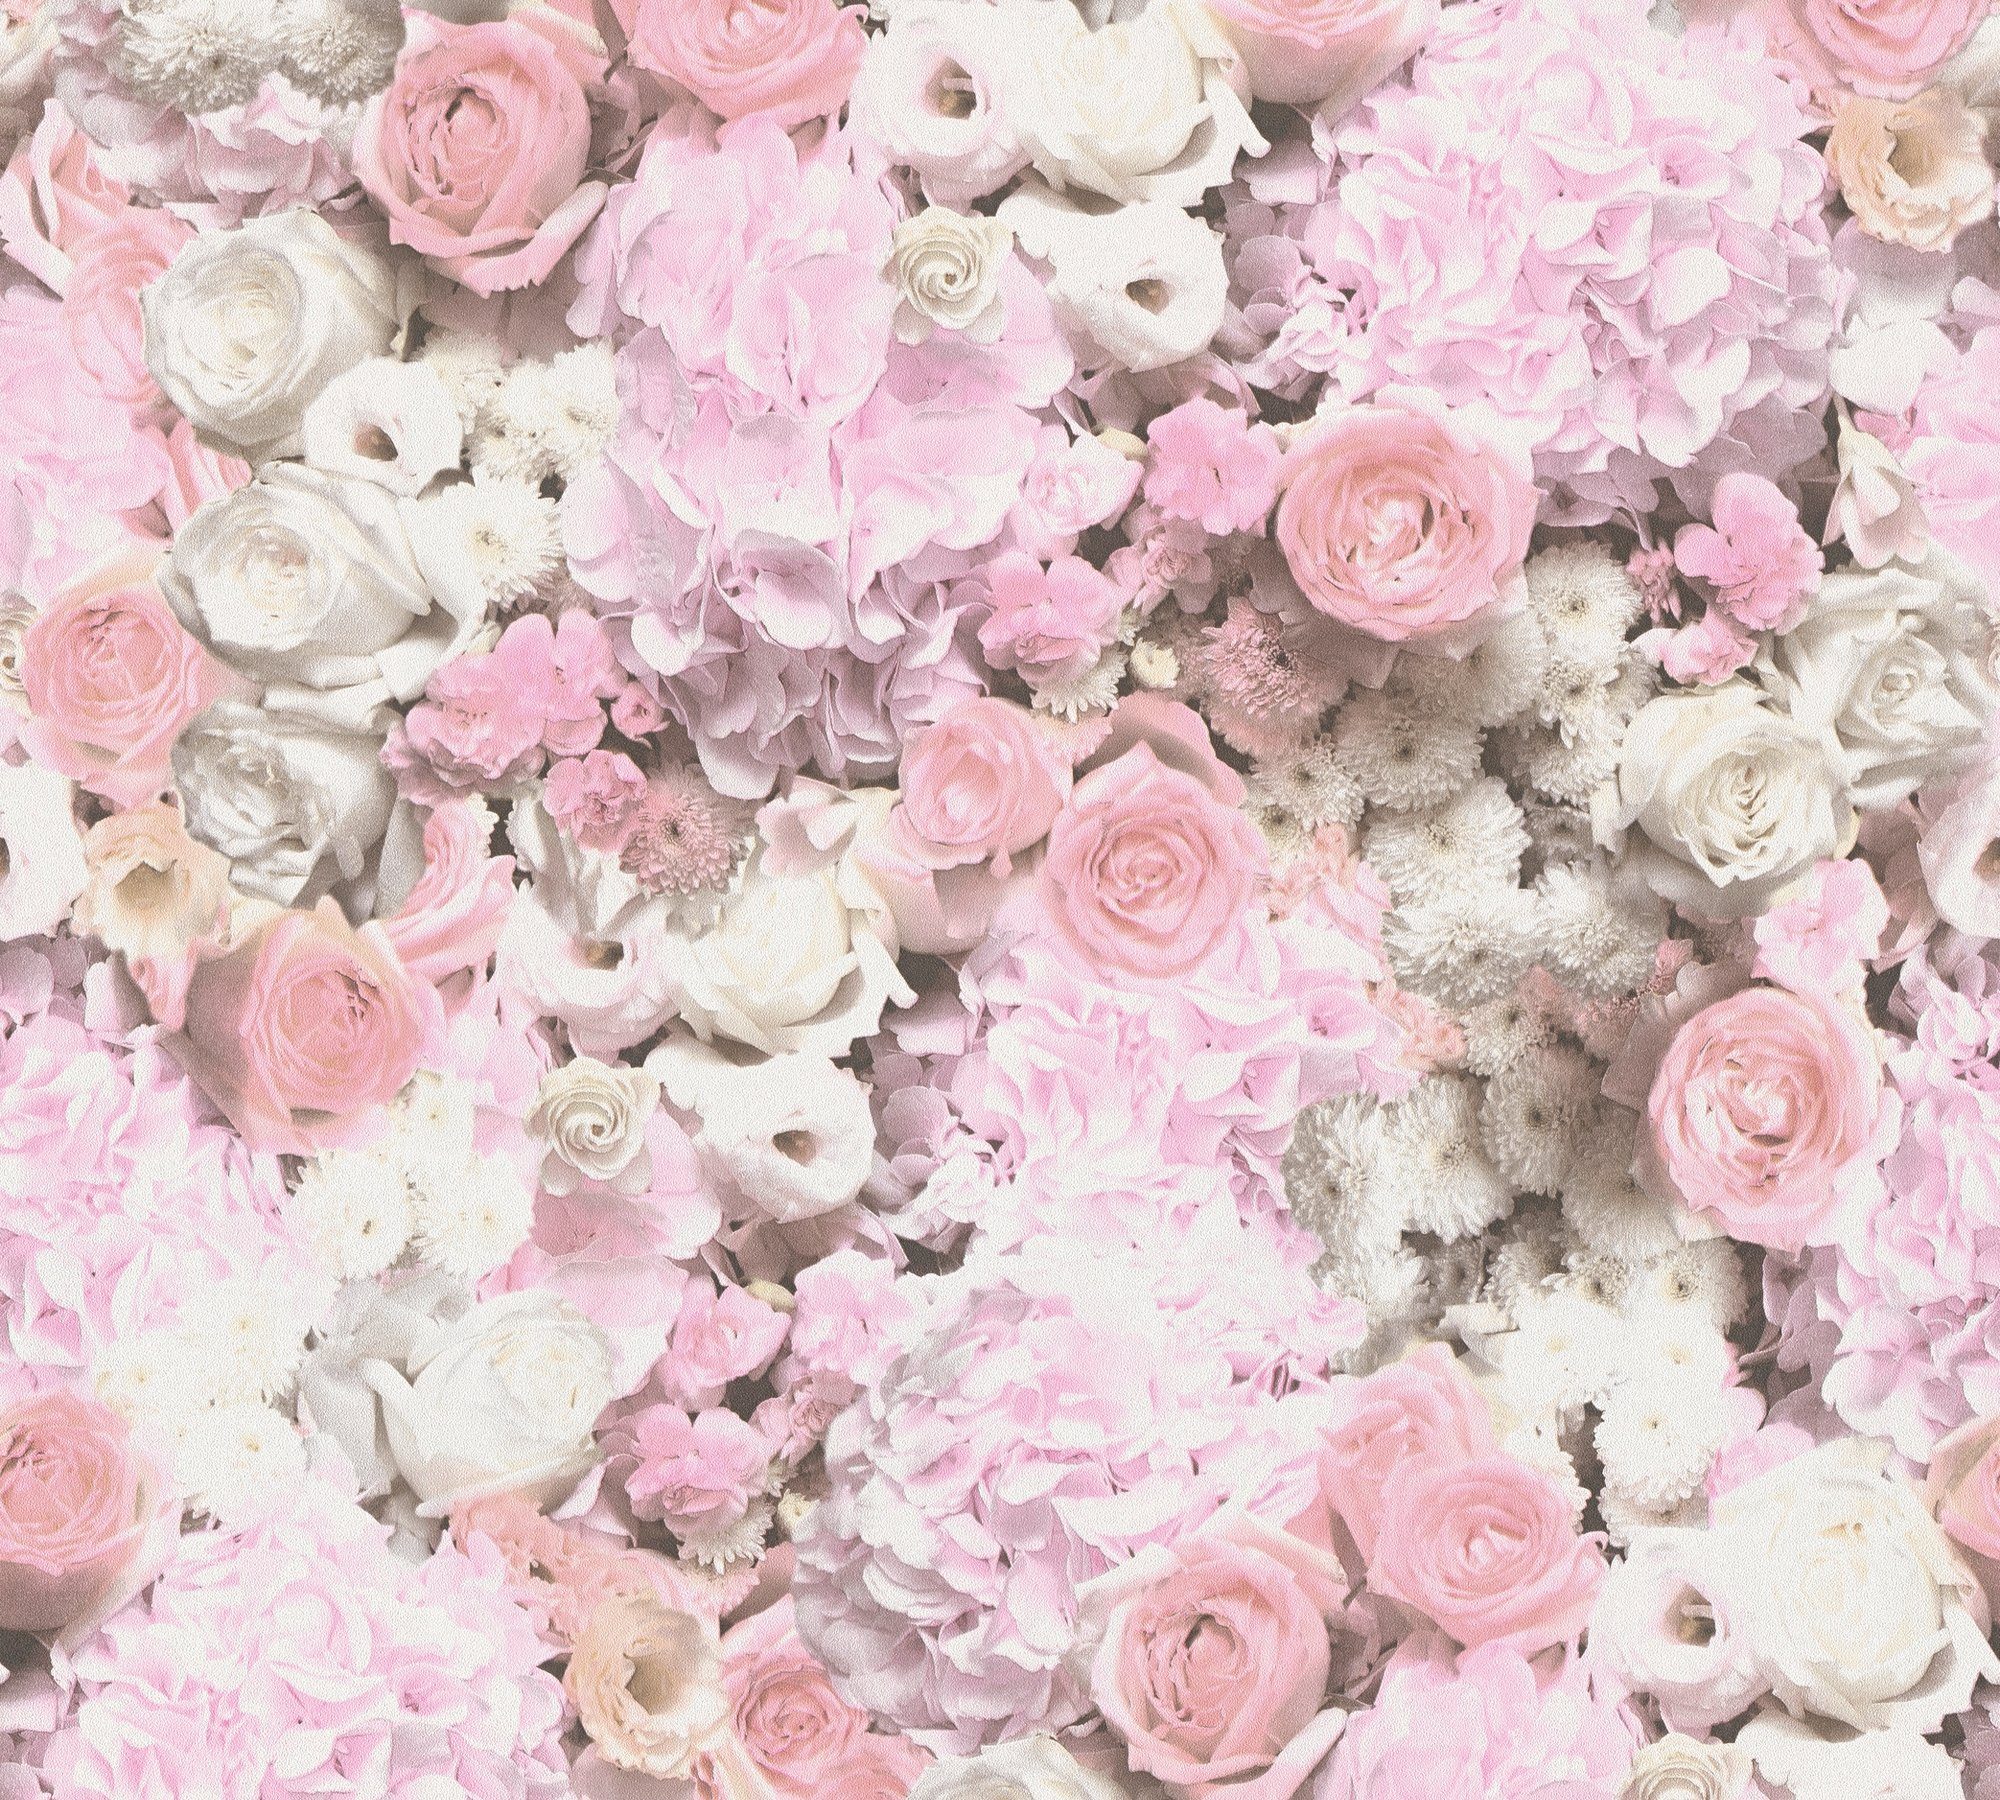 Tapete Trendwall, Glitzertapete botanisch, Blumen floral, Création rosa/weiß A.S. Vliestapete